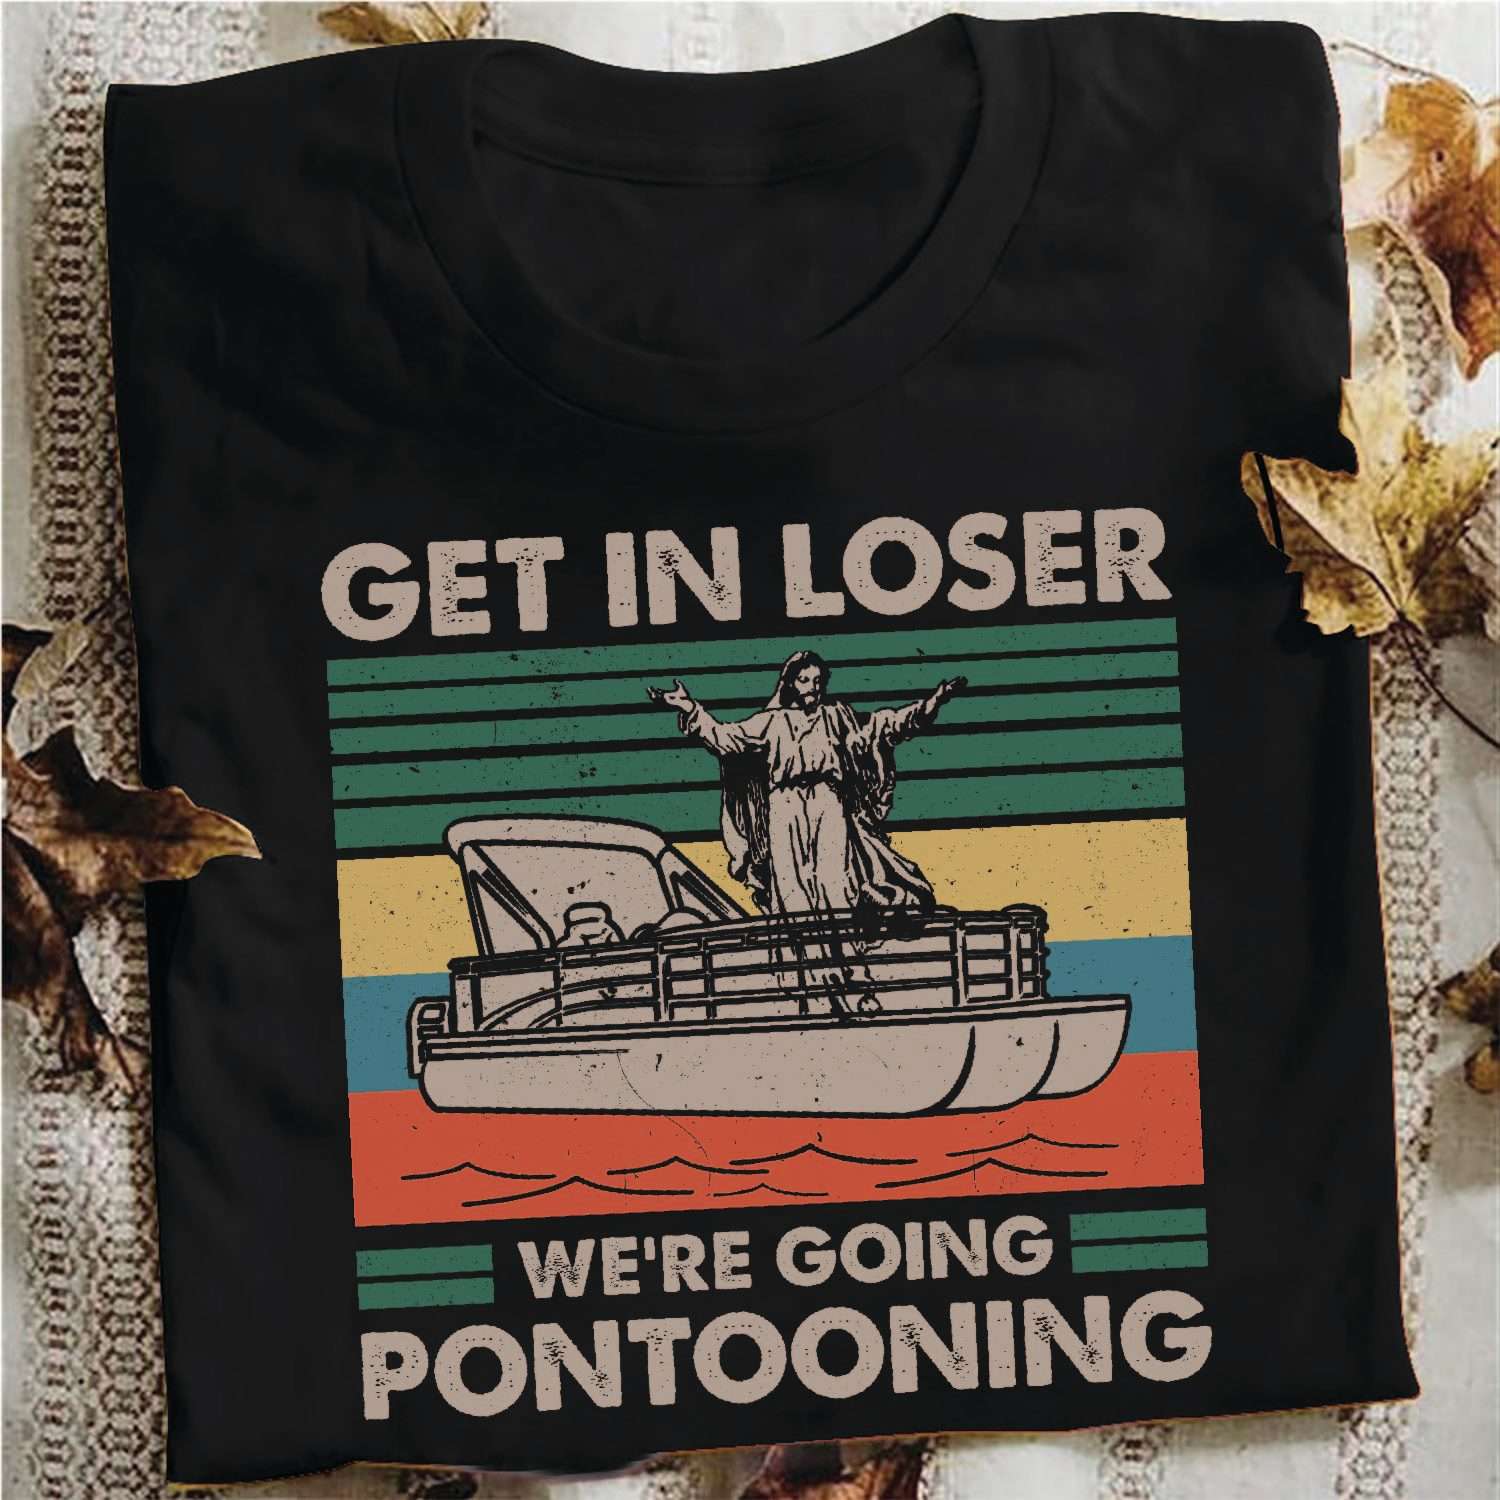 Get in loser, we're going pontooning - Jesus and pontoon